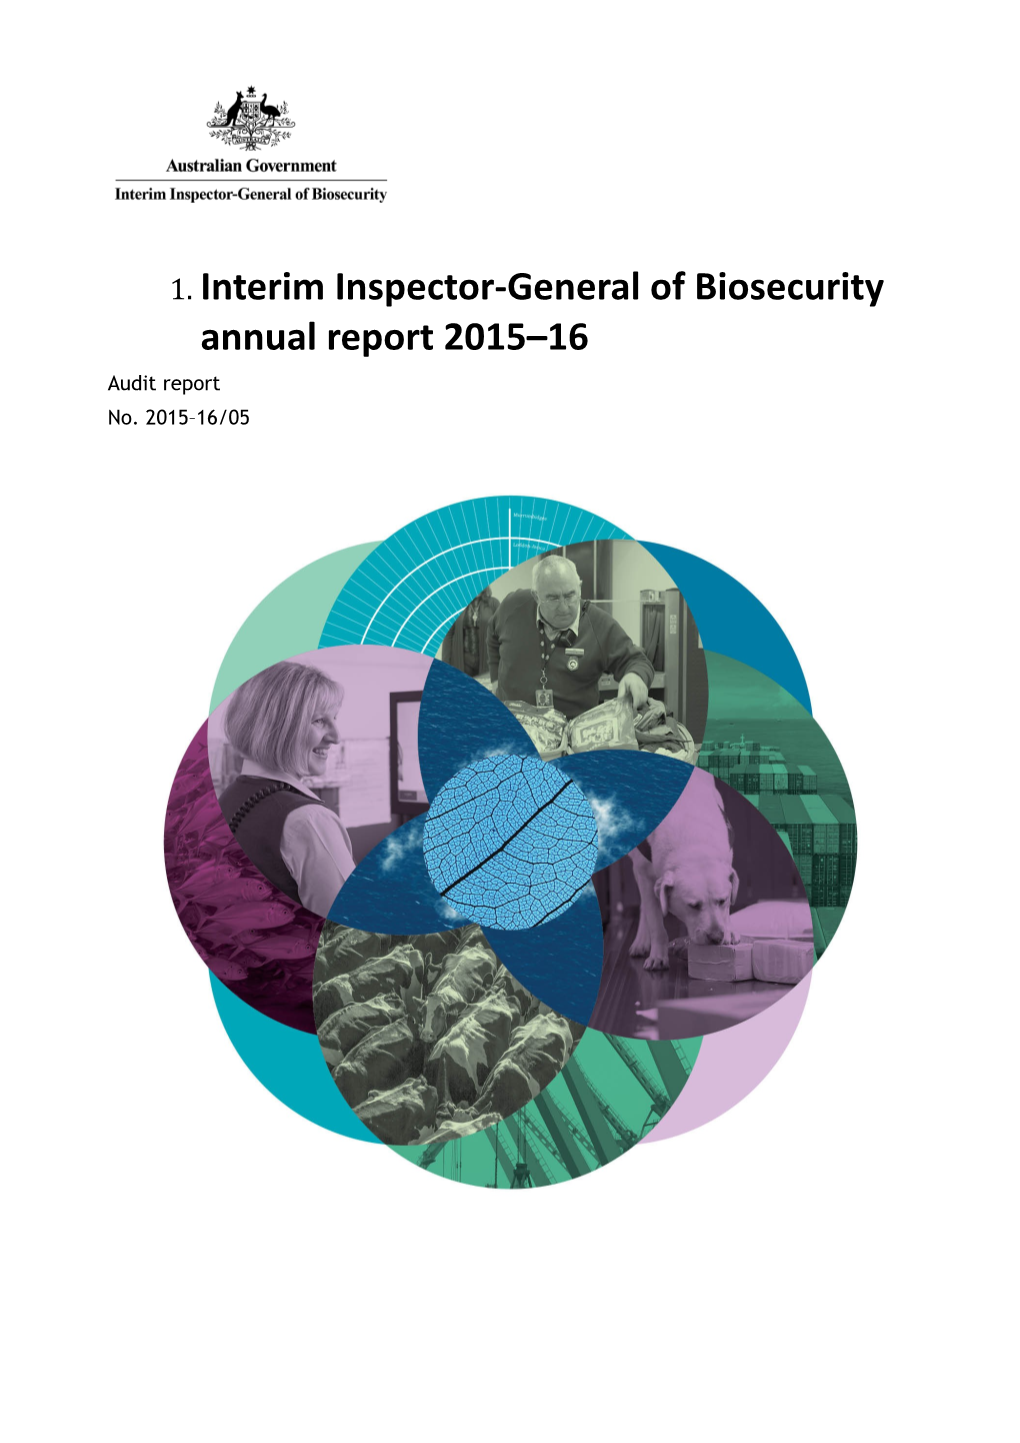 Interim Inspector-General of Biosecurity Annual Report 2015 16